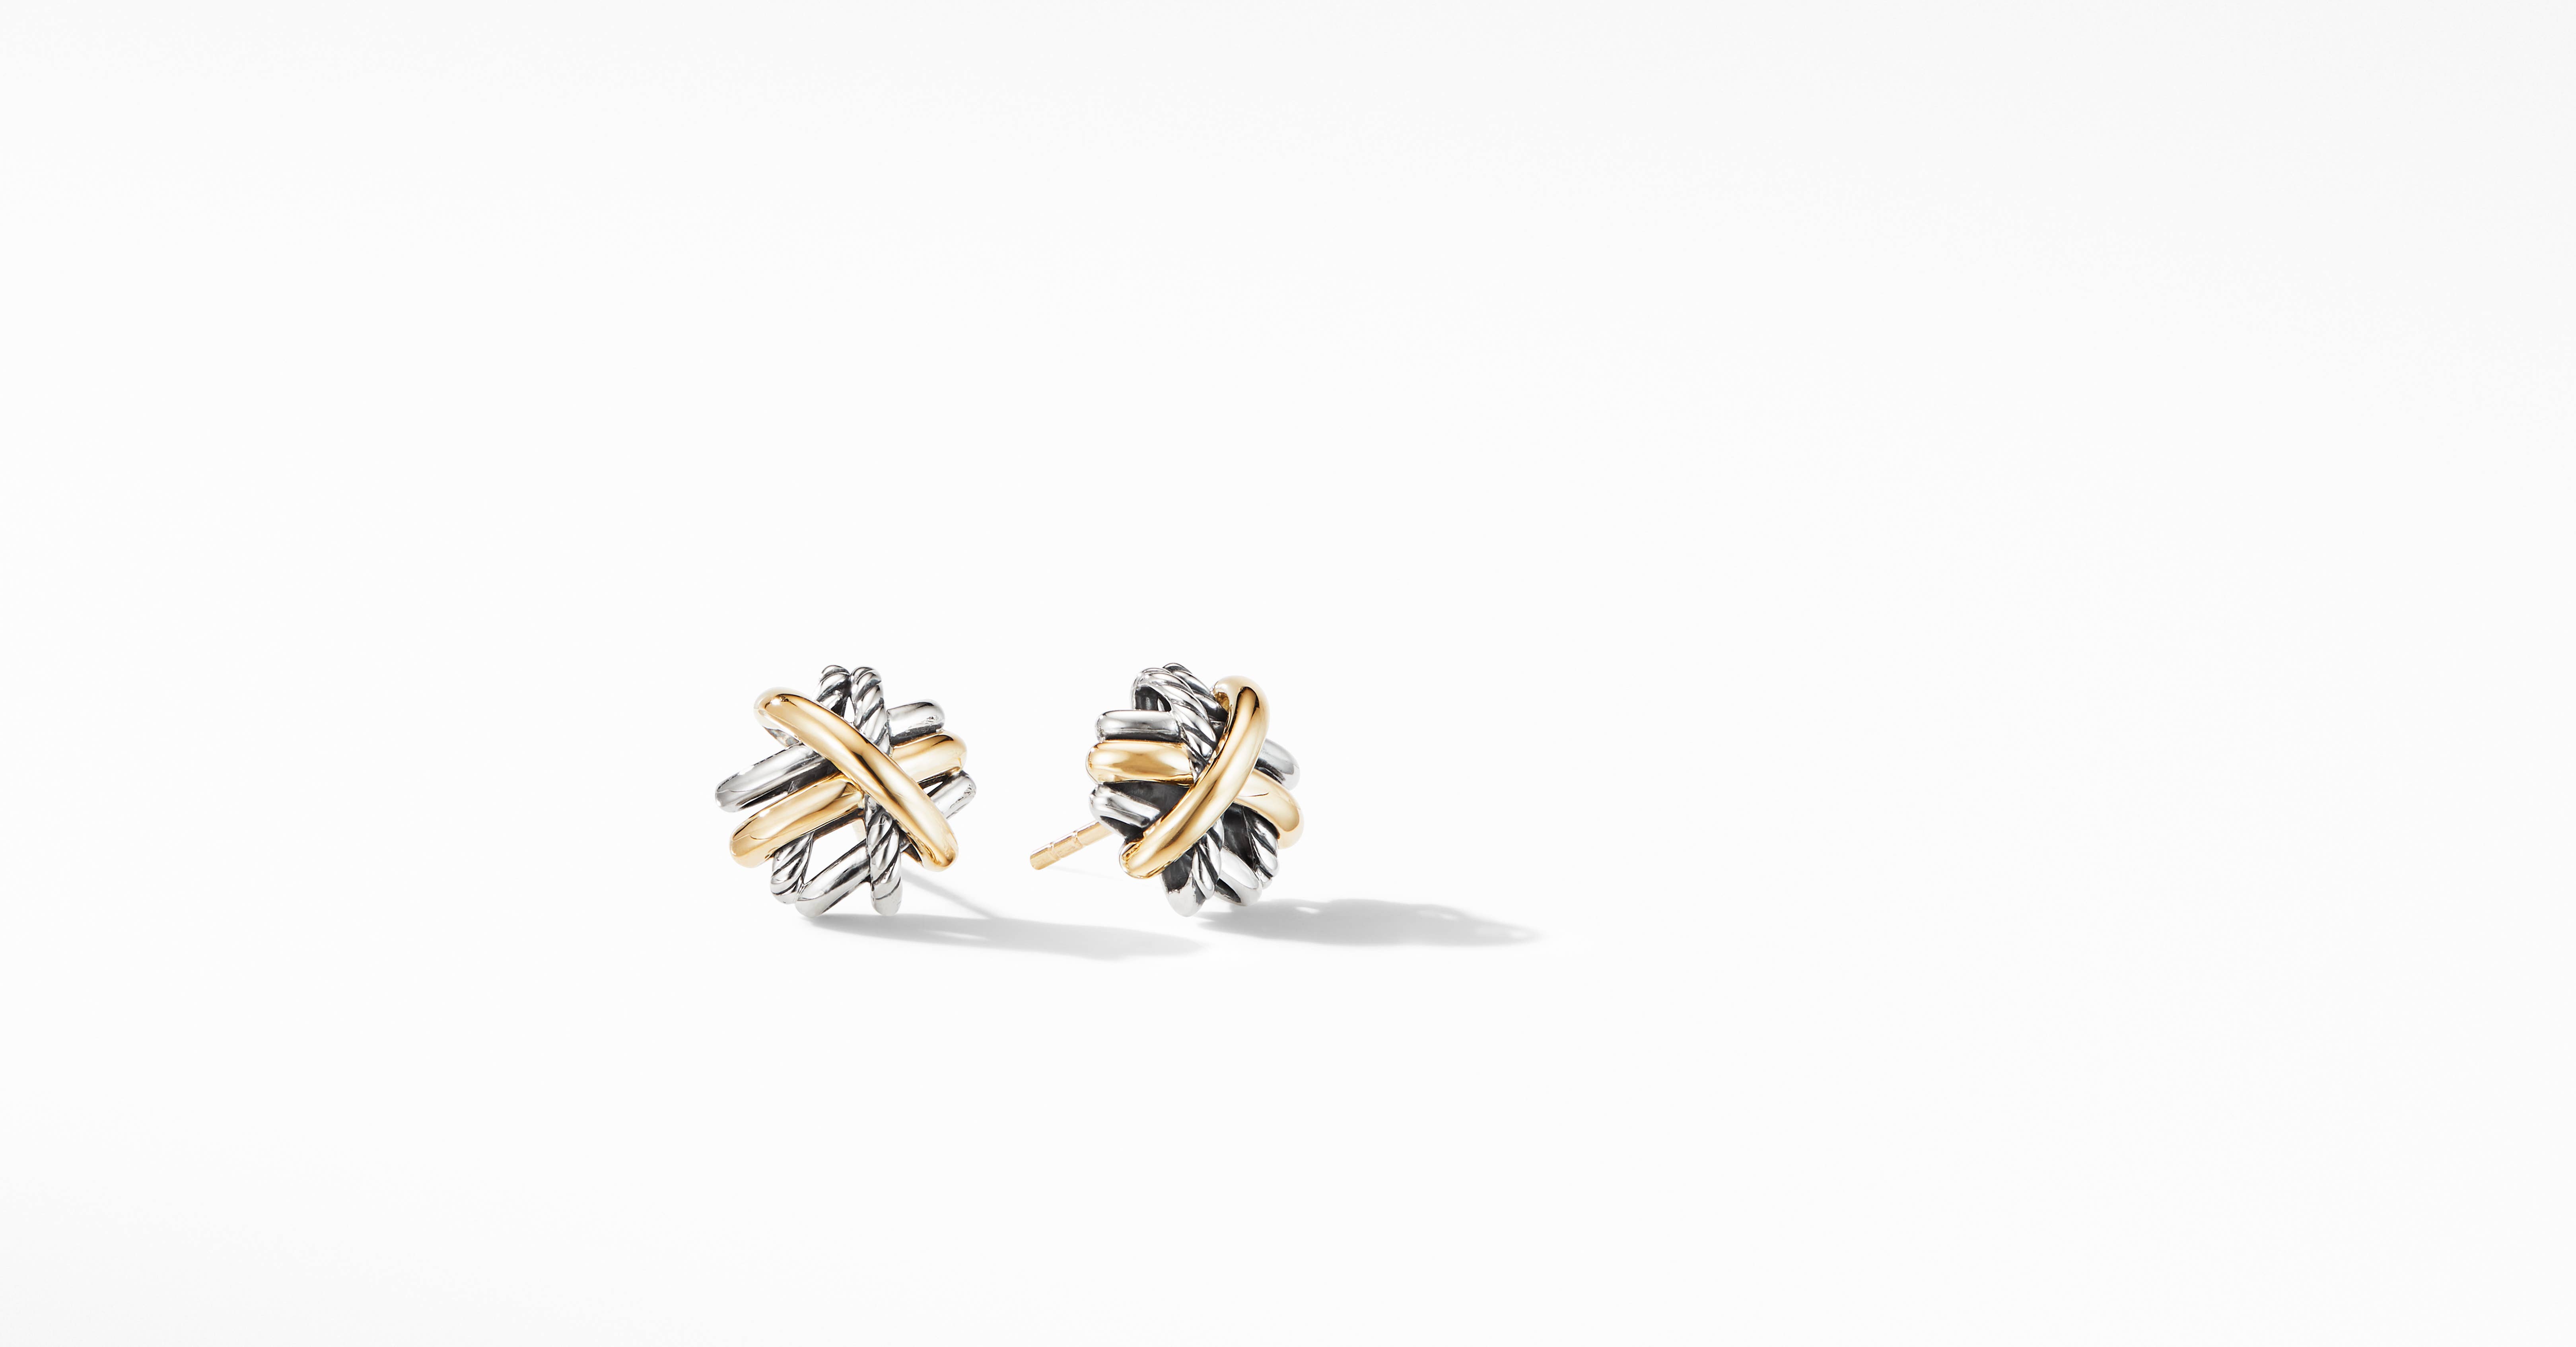 David Yurman | Crossover Stud Earrings with 18K Yellow Gold